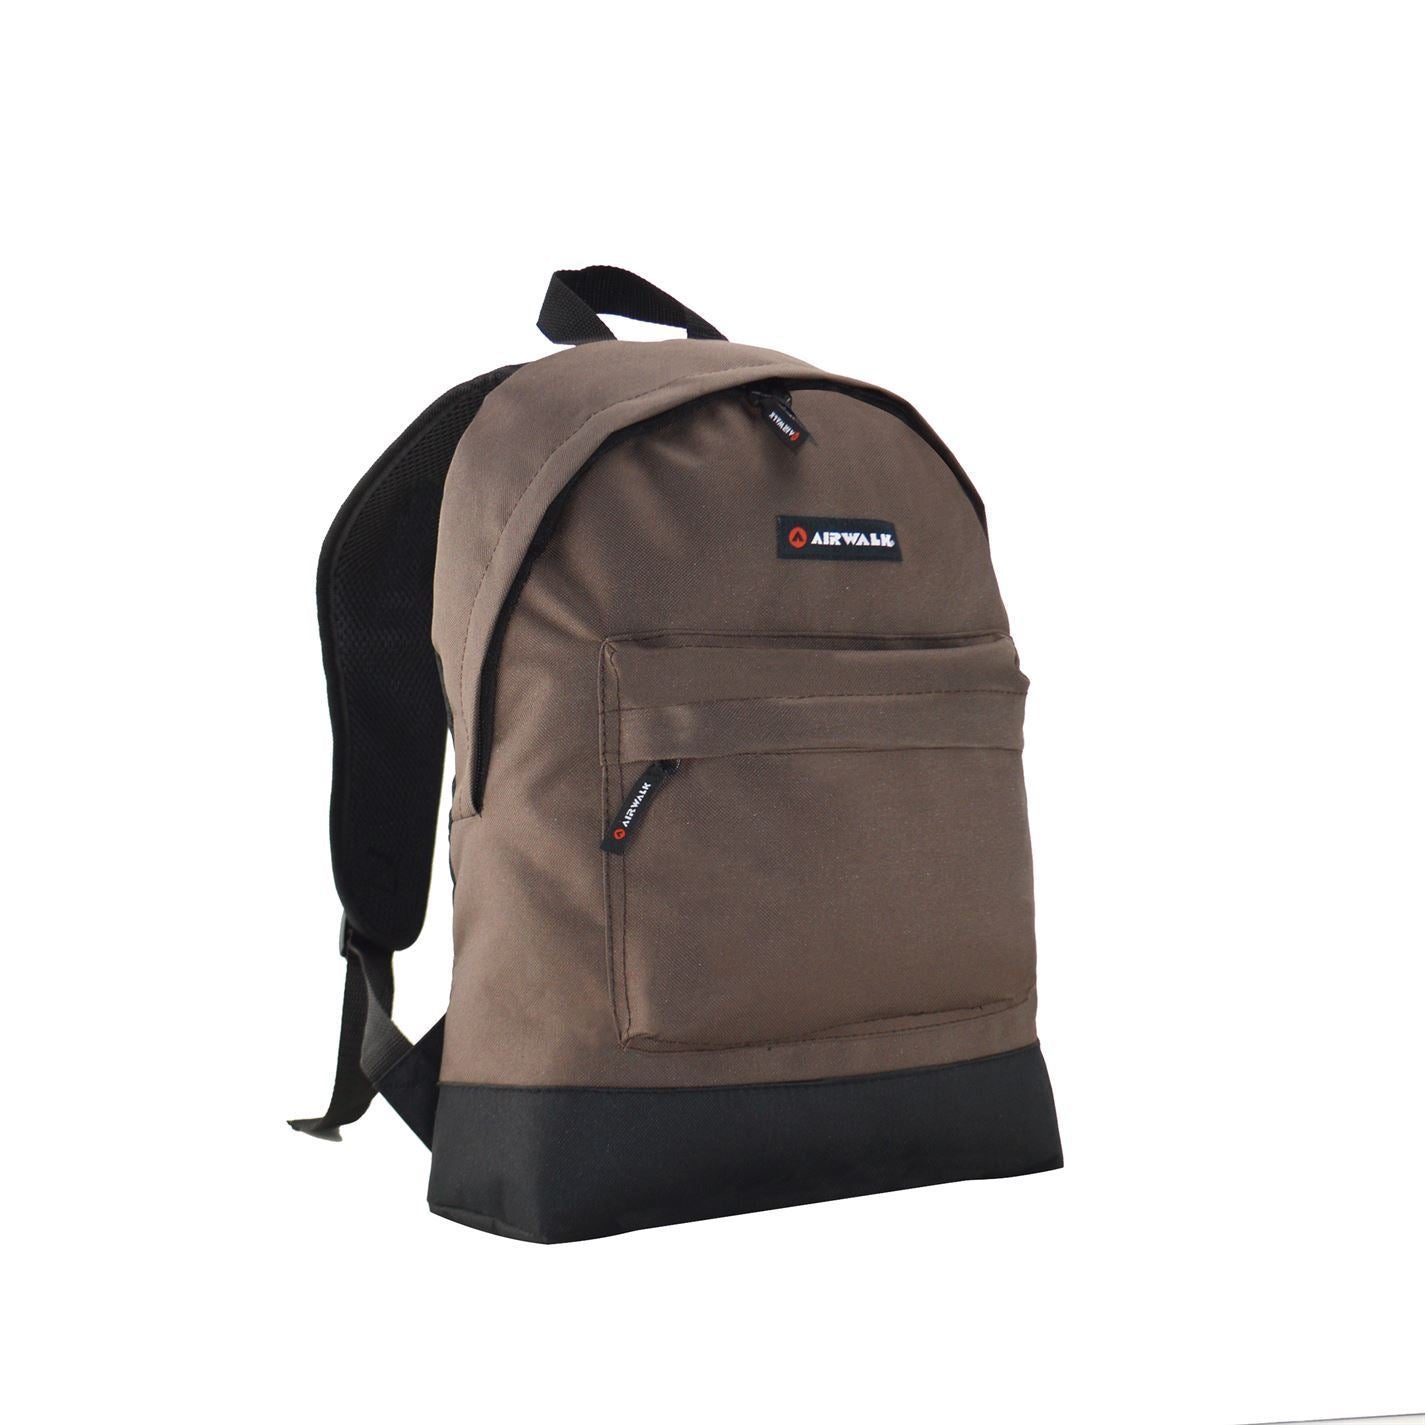 Shop Airwalk Men's Backpacks up to 85% Off | DealDoodle